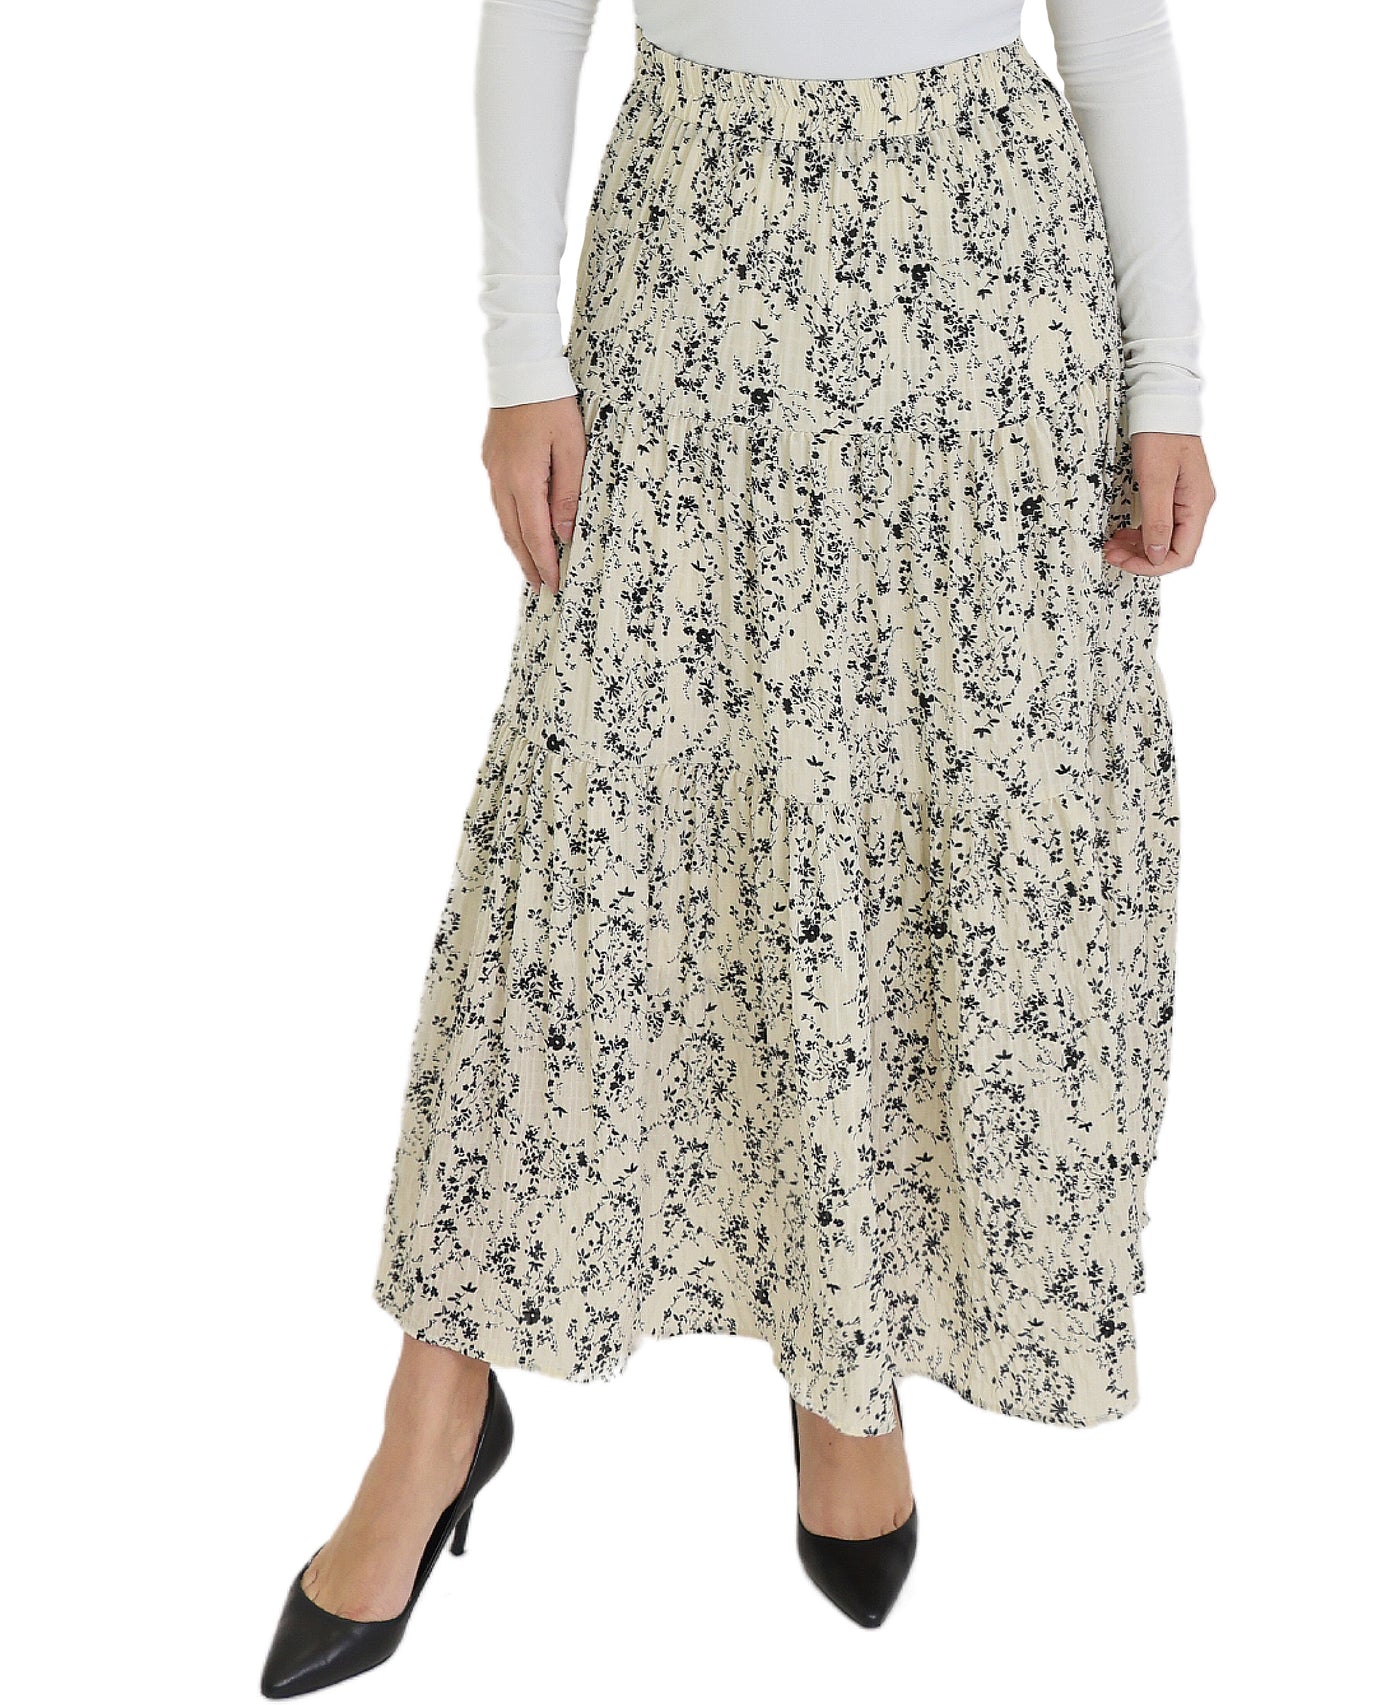 Tiered Floral Midi Skirt image 1